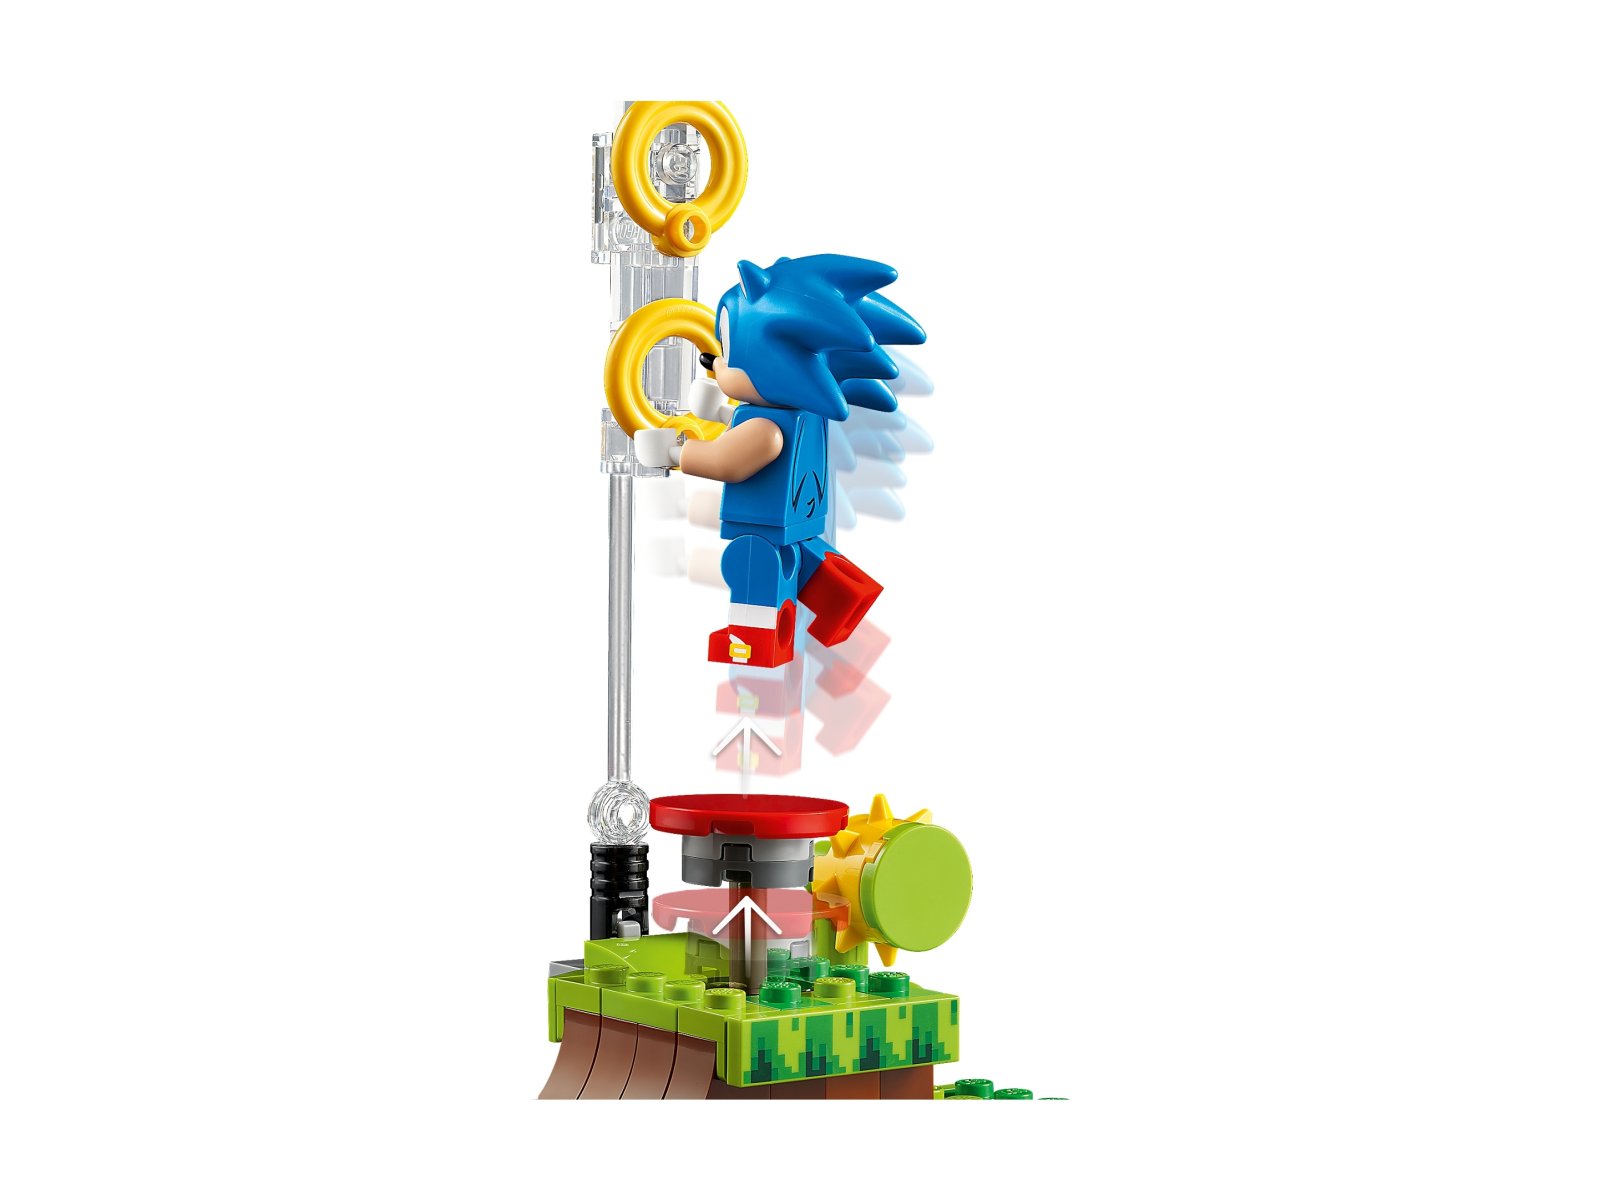 LEGO Ideas 21331 Sonic the Hedgehog™ – Green Hill Zone